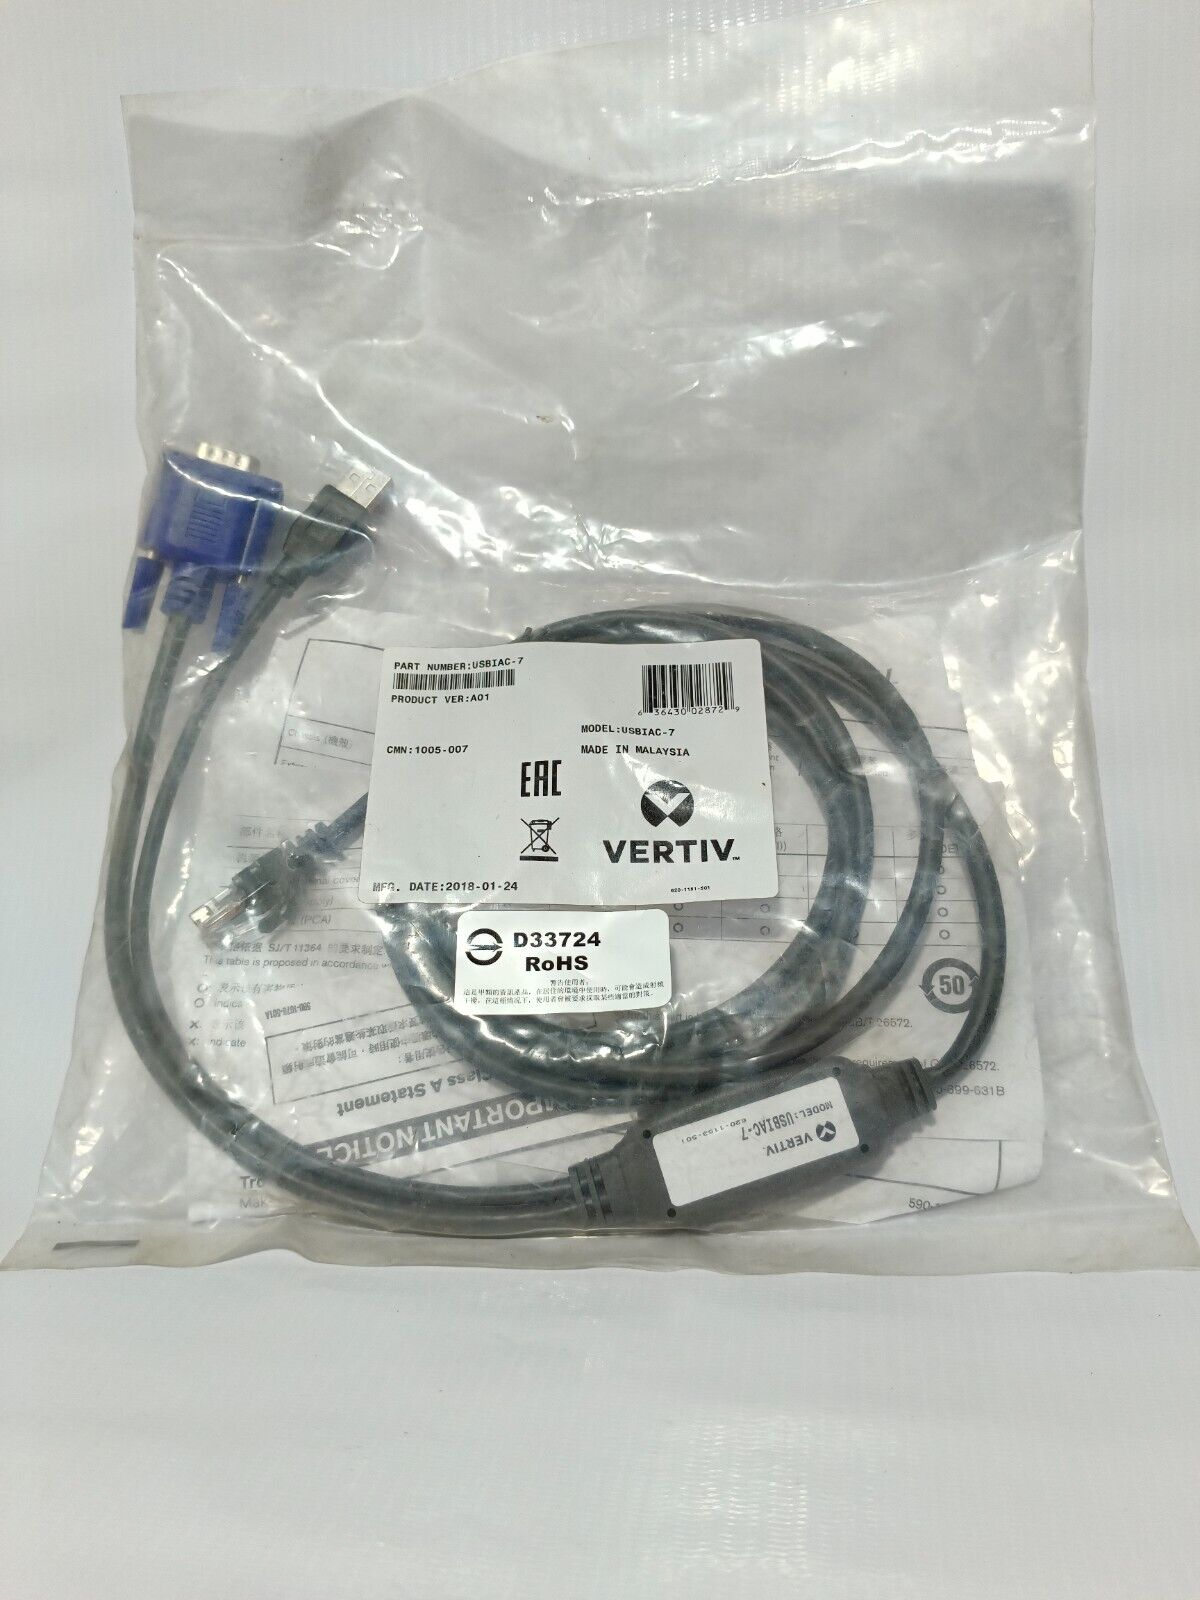 Vertiv Autoview USBIAC-7 USB KVM Switch Cable Module for Avocent USB KVM